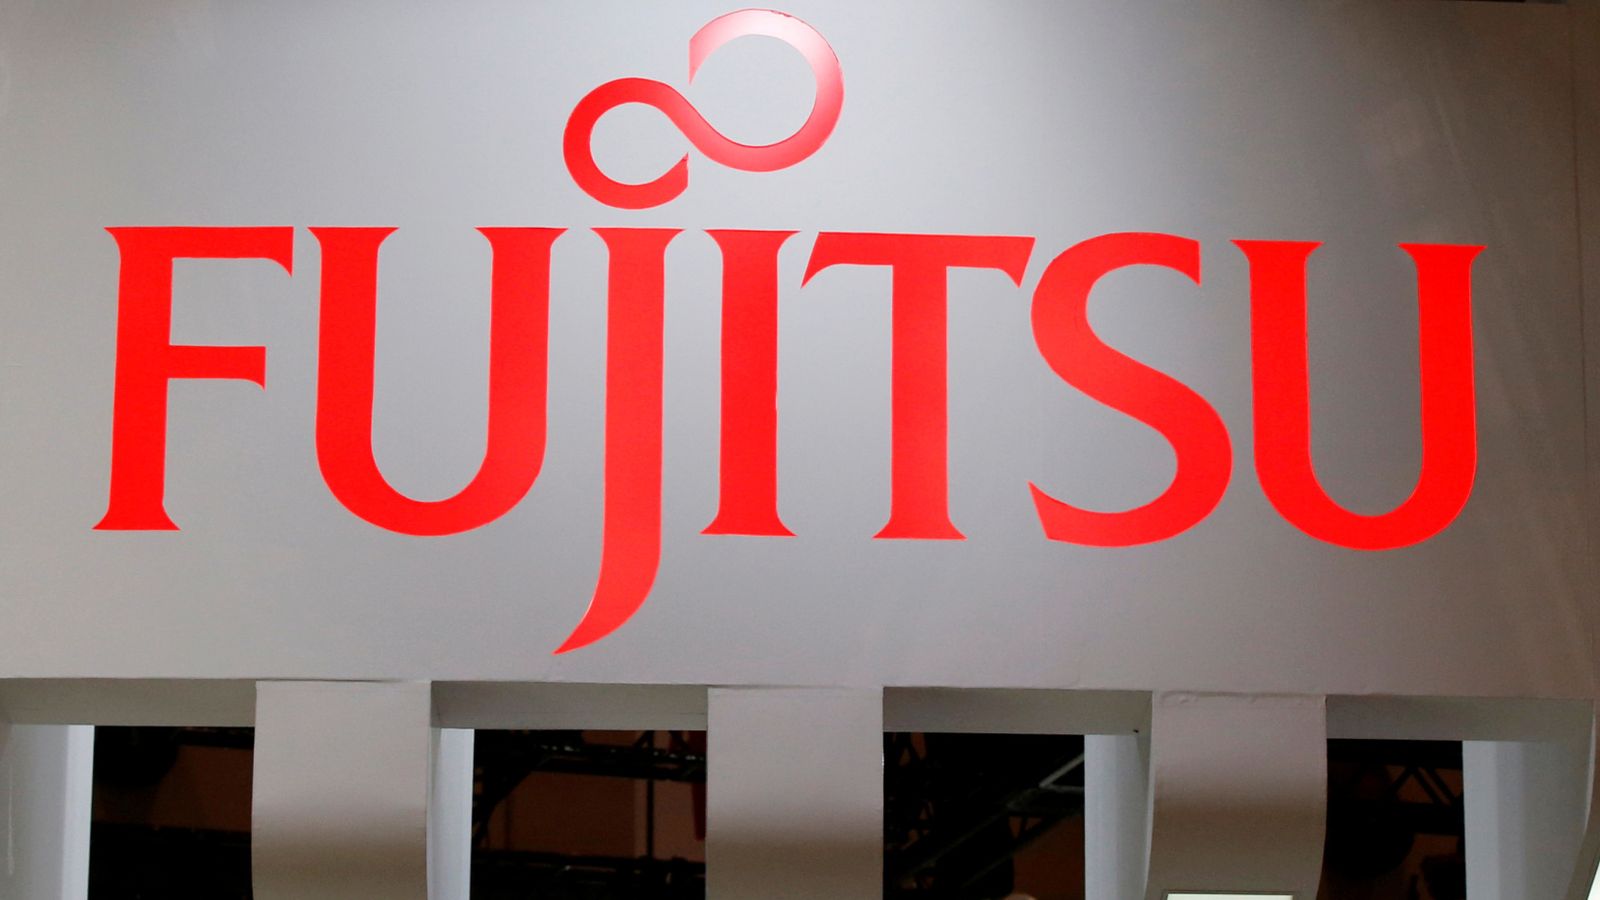 Post Office scandal: Horizon developer Fujitsu says it will compensate victims